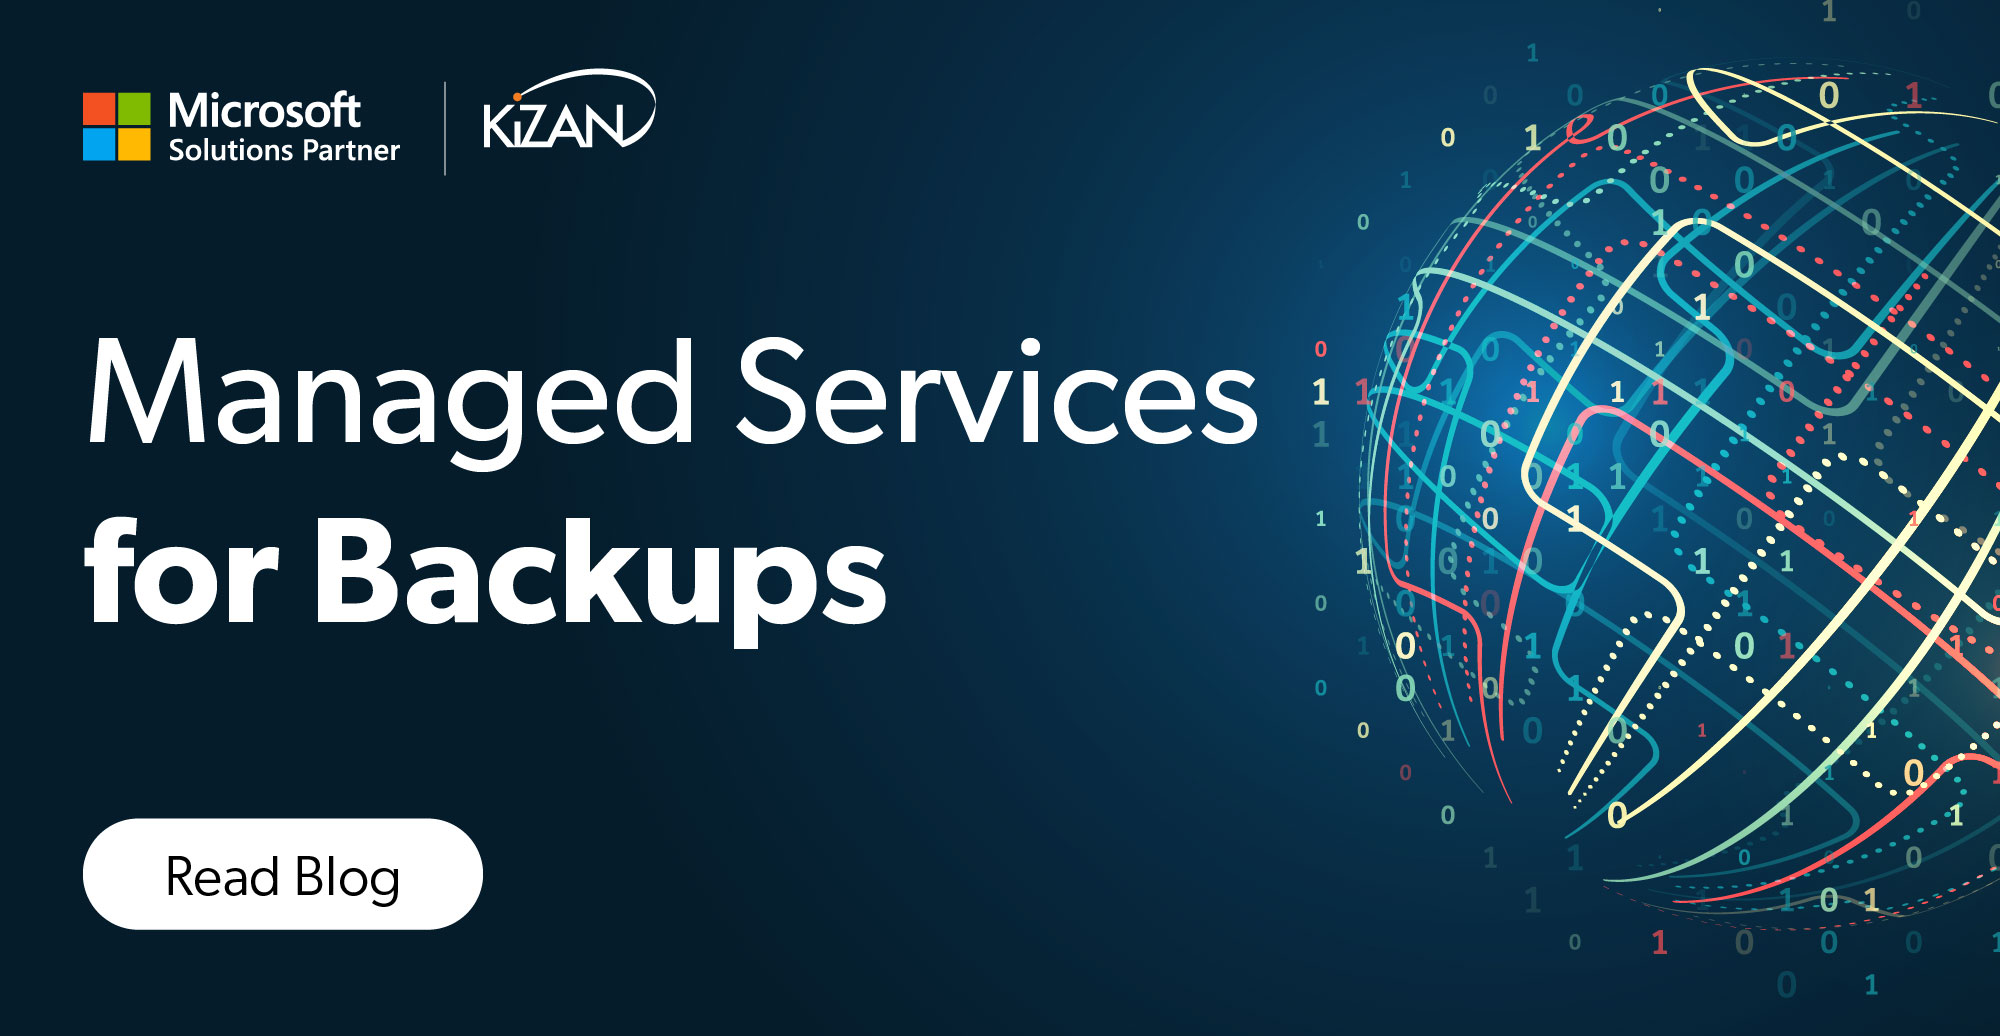 KiZAN | Managed Services for Backups